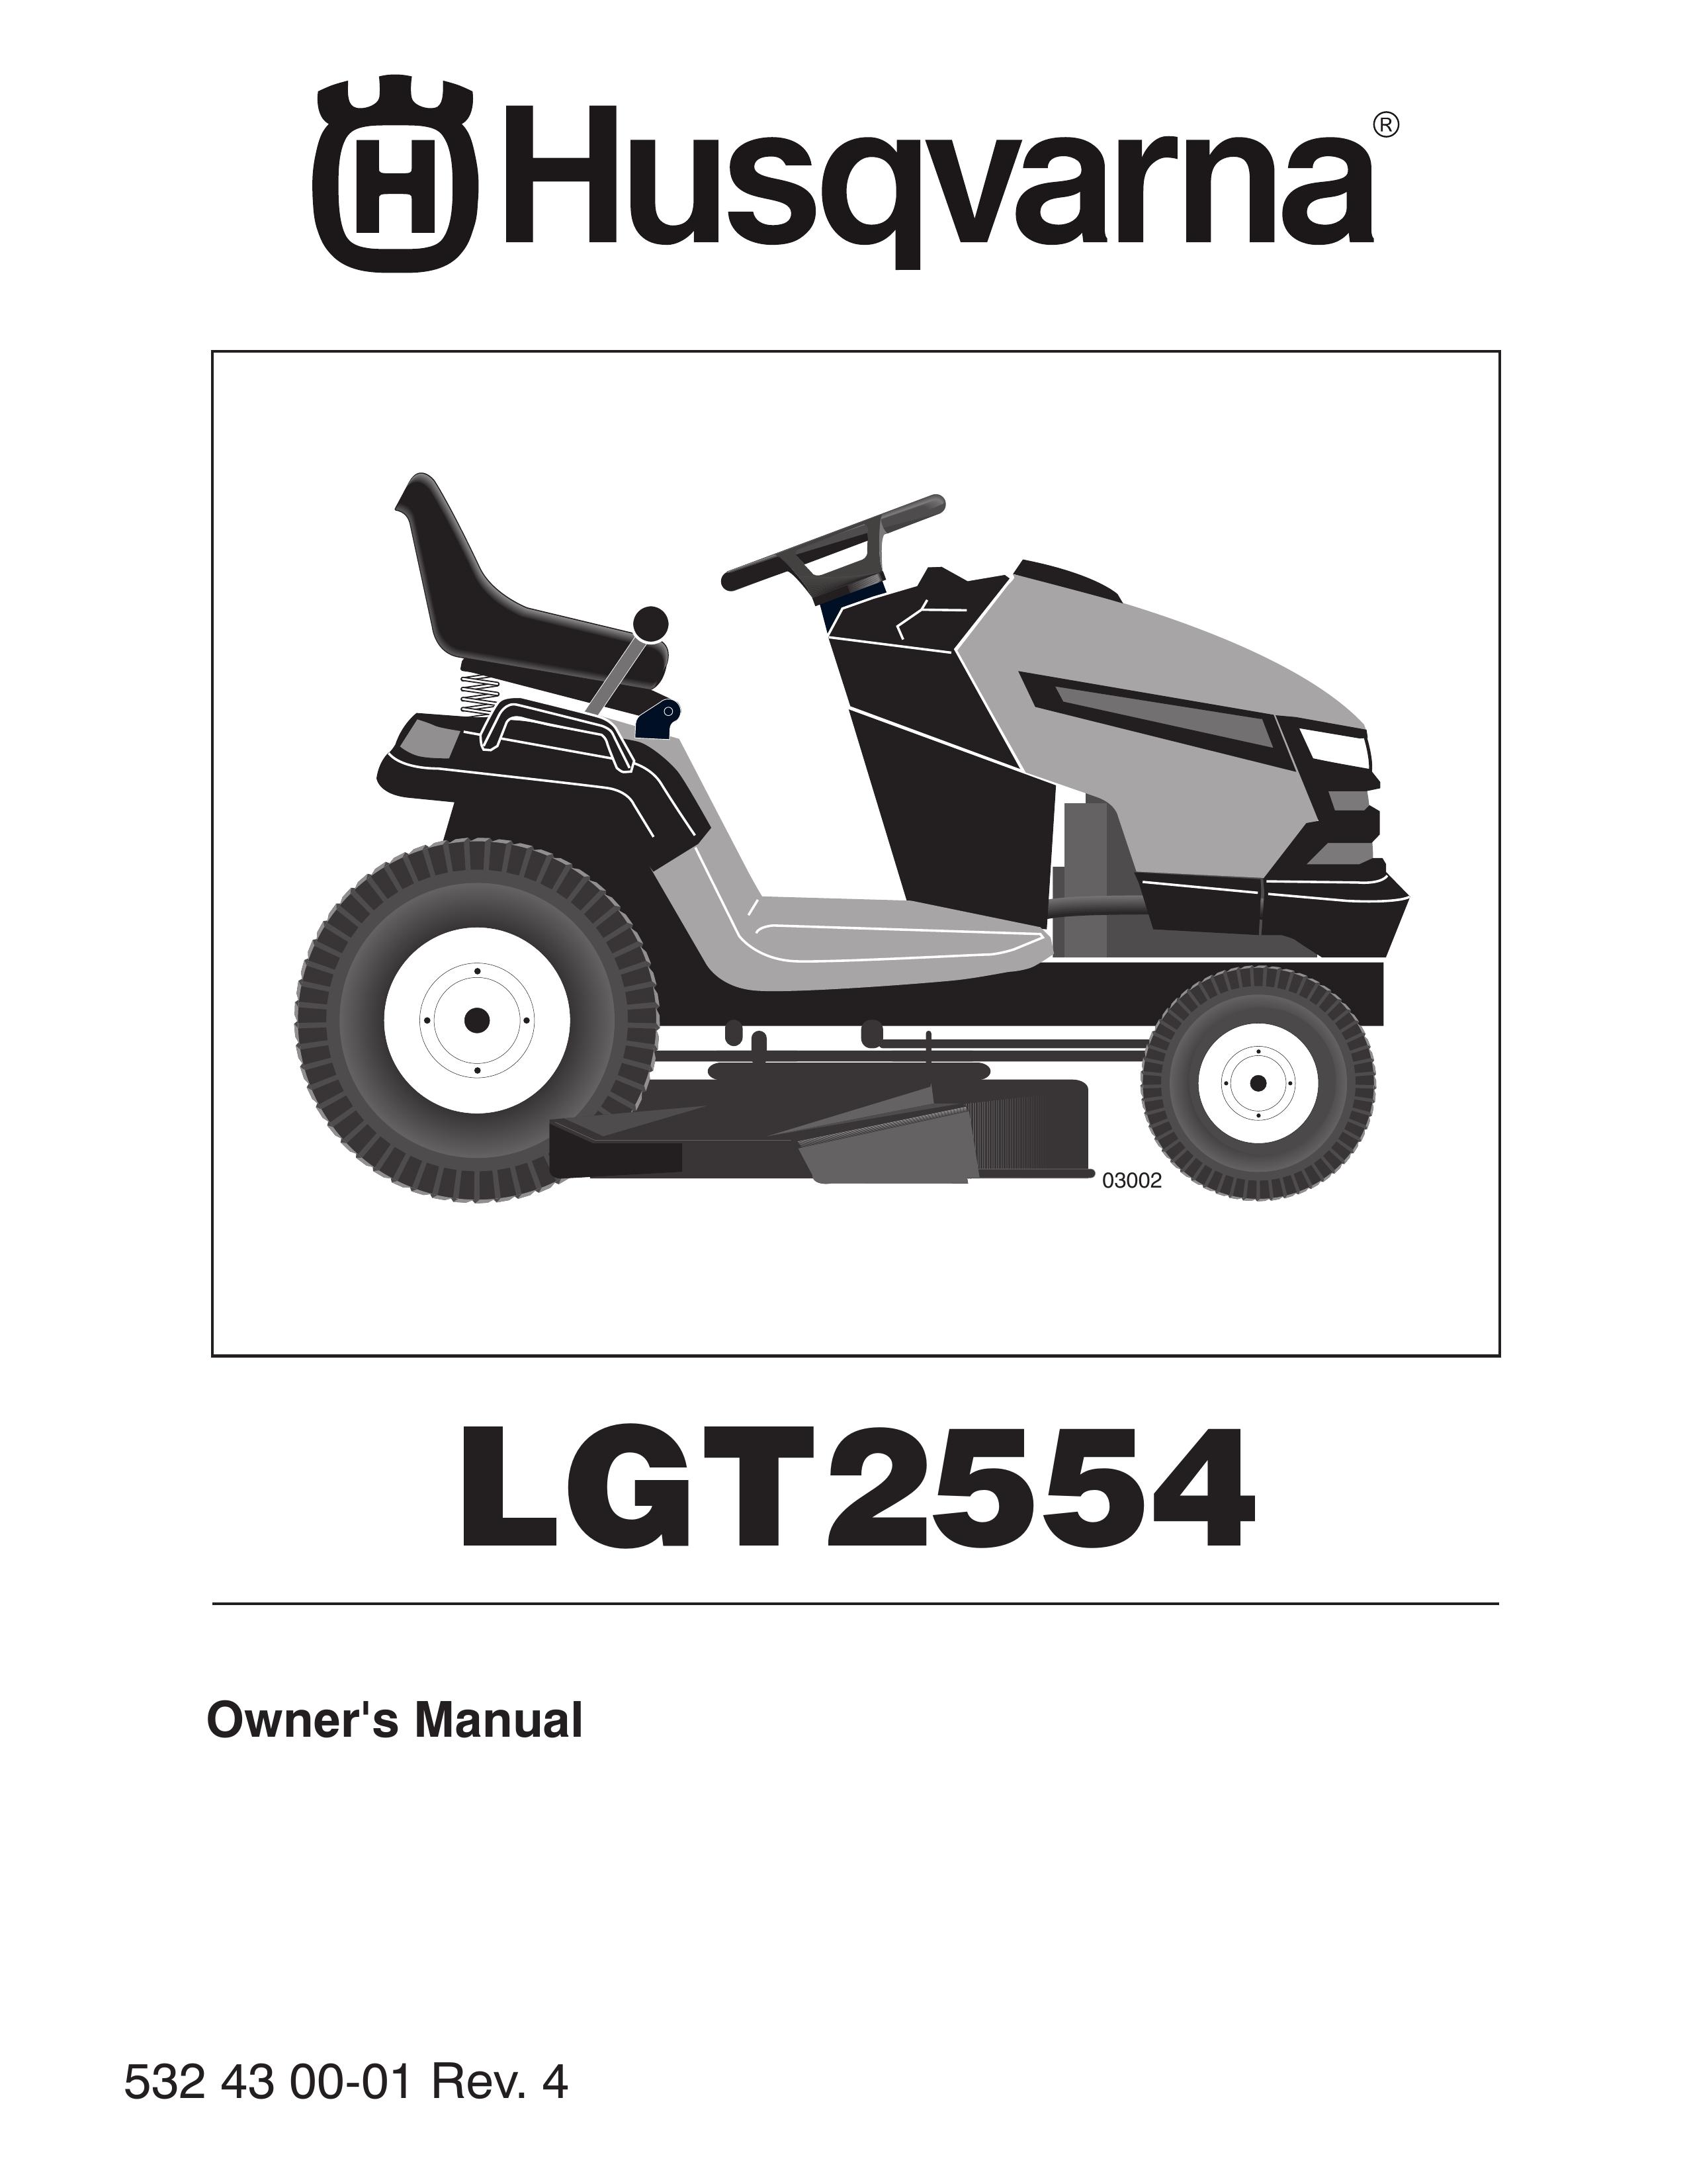 Husqvarna 03002 Lawn Mower User Manual